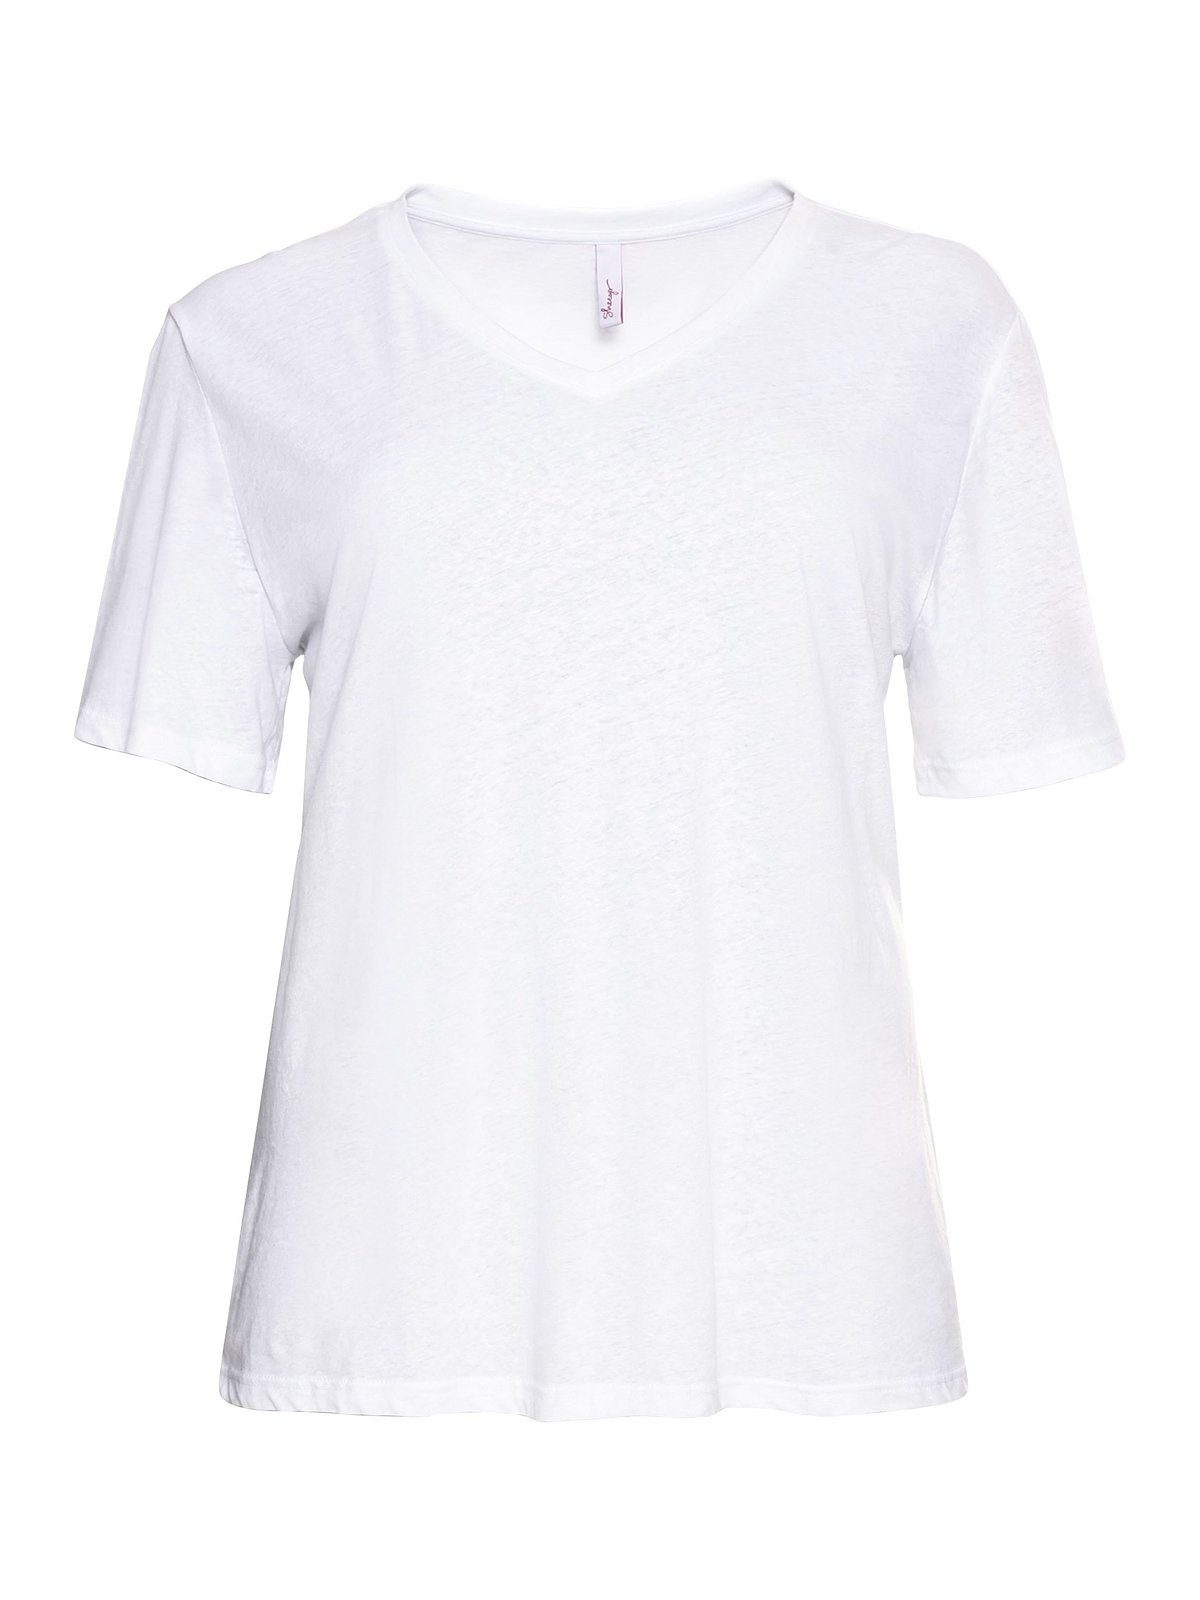 Sheego T-Shirt Große edlem aus Leinen-Viskose-Mix weiß Größen